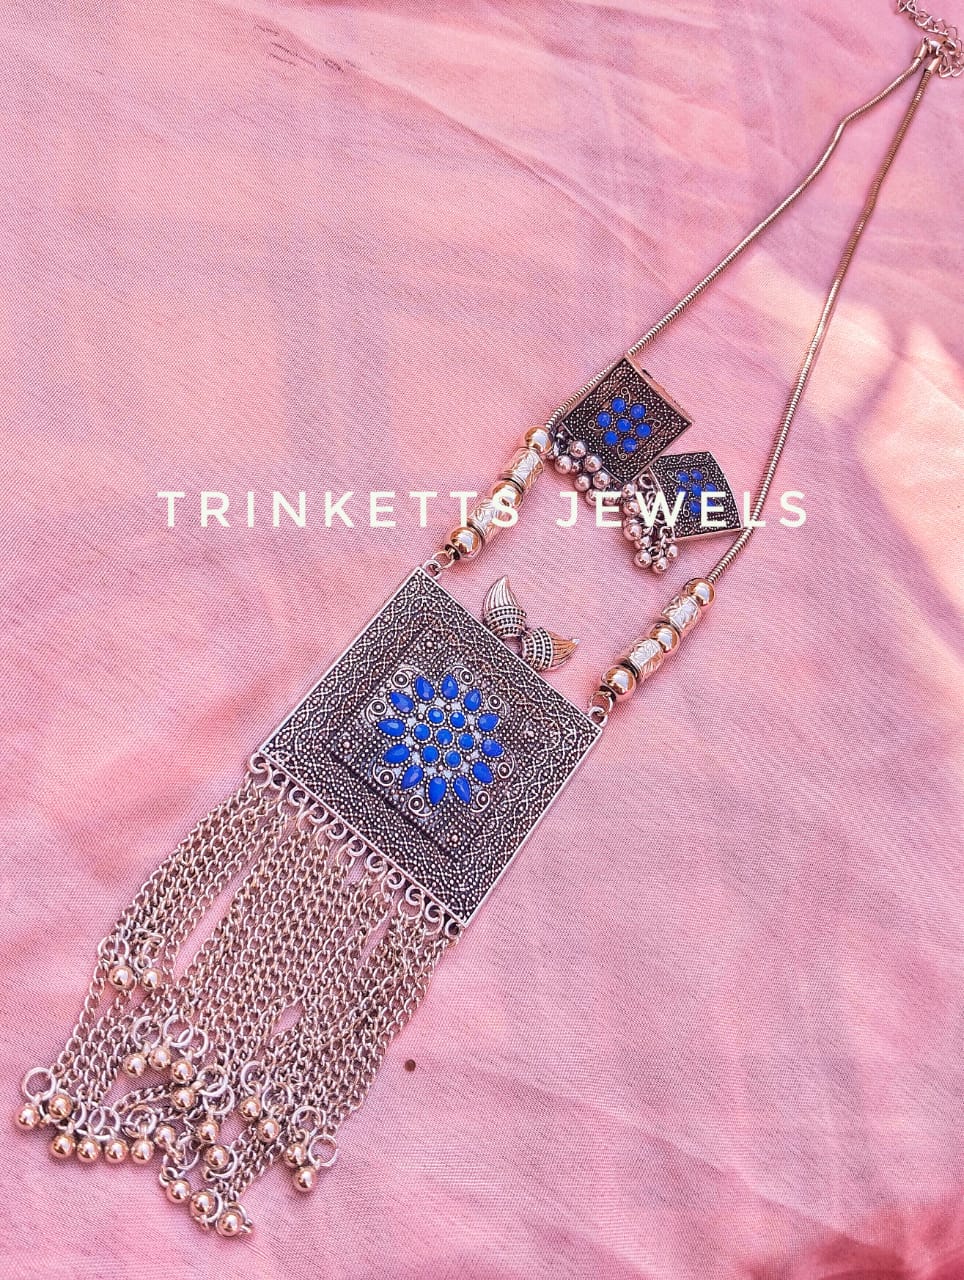 Blue Meenakaari Pendant Set - Intricate Afghan Design with Ghungroo Embellishments - Adjustable Chain Included.